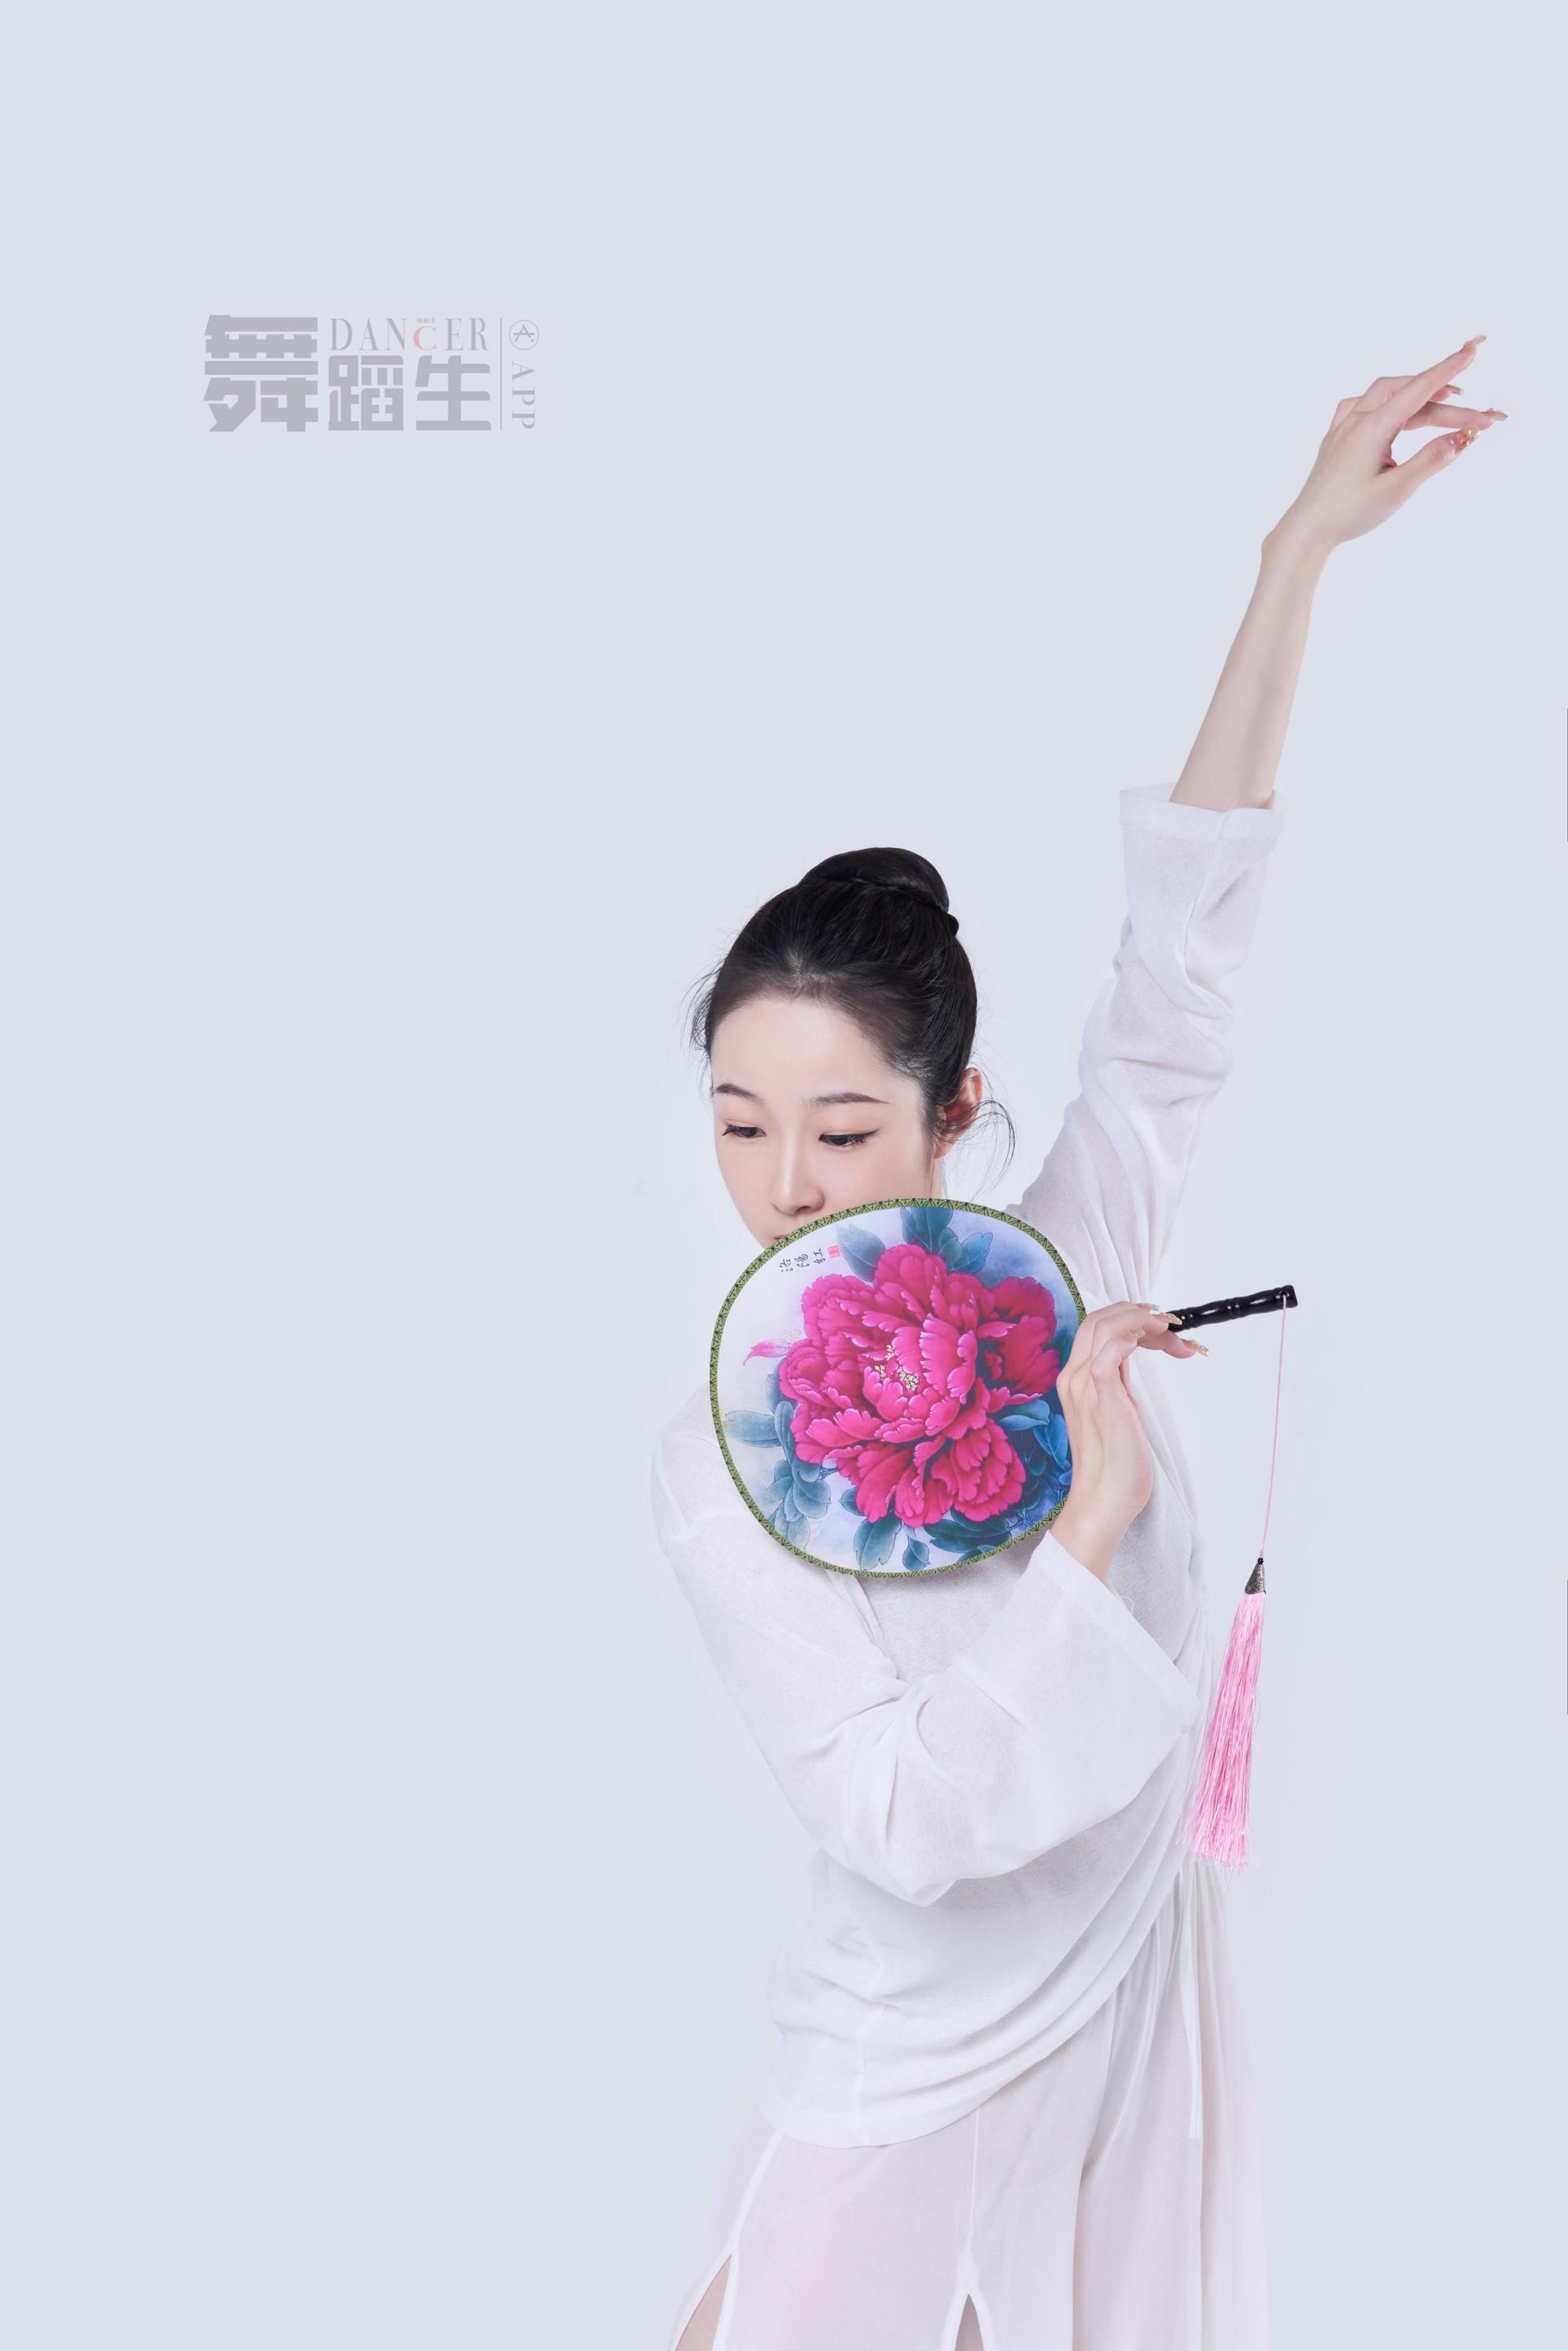 [GALLI嘉丽]舞蹈生日记 087 – 婀娜多姿 景思佳  舞蹈生DANCER 第04期[41P]插图